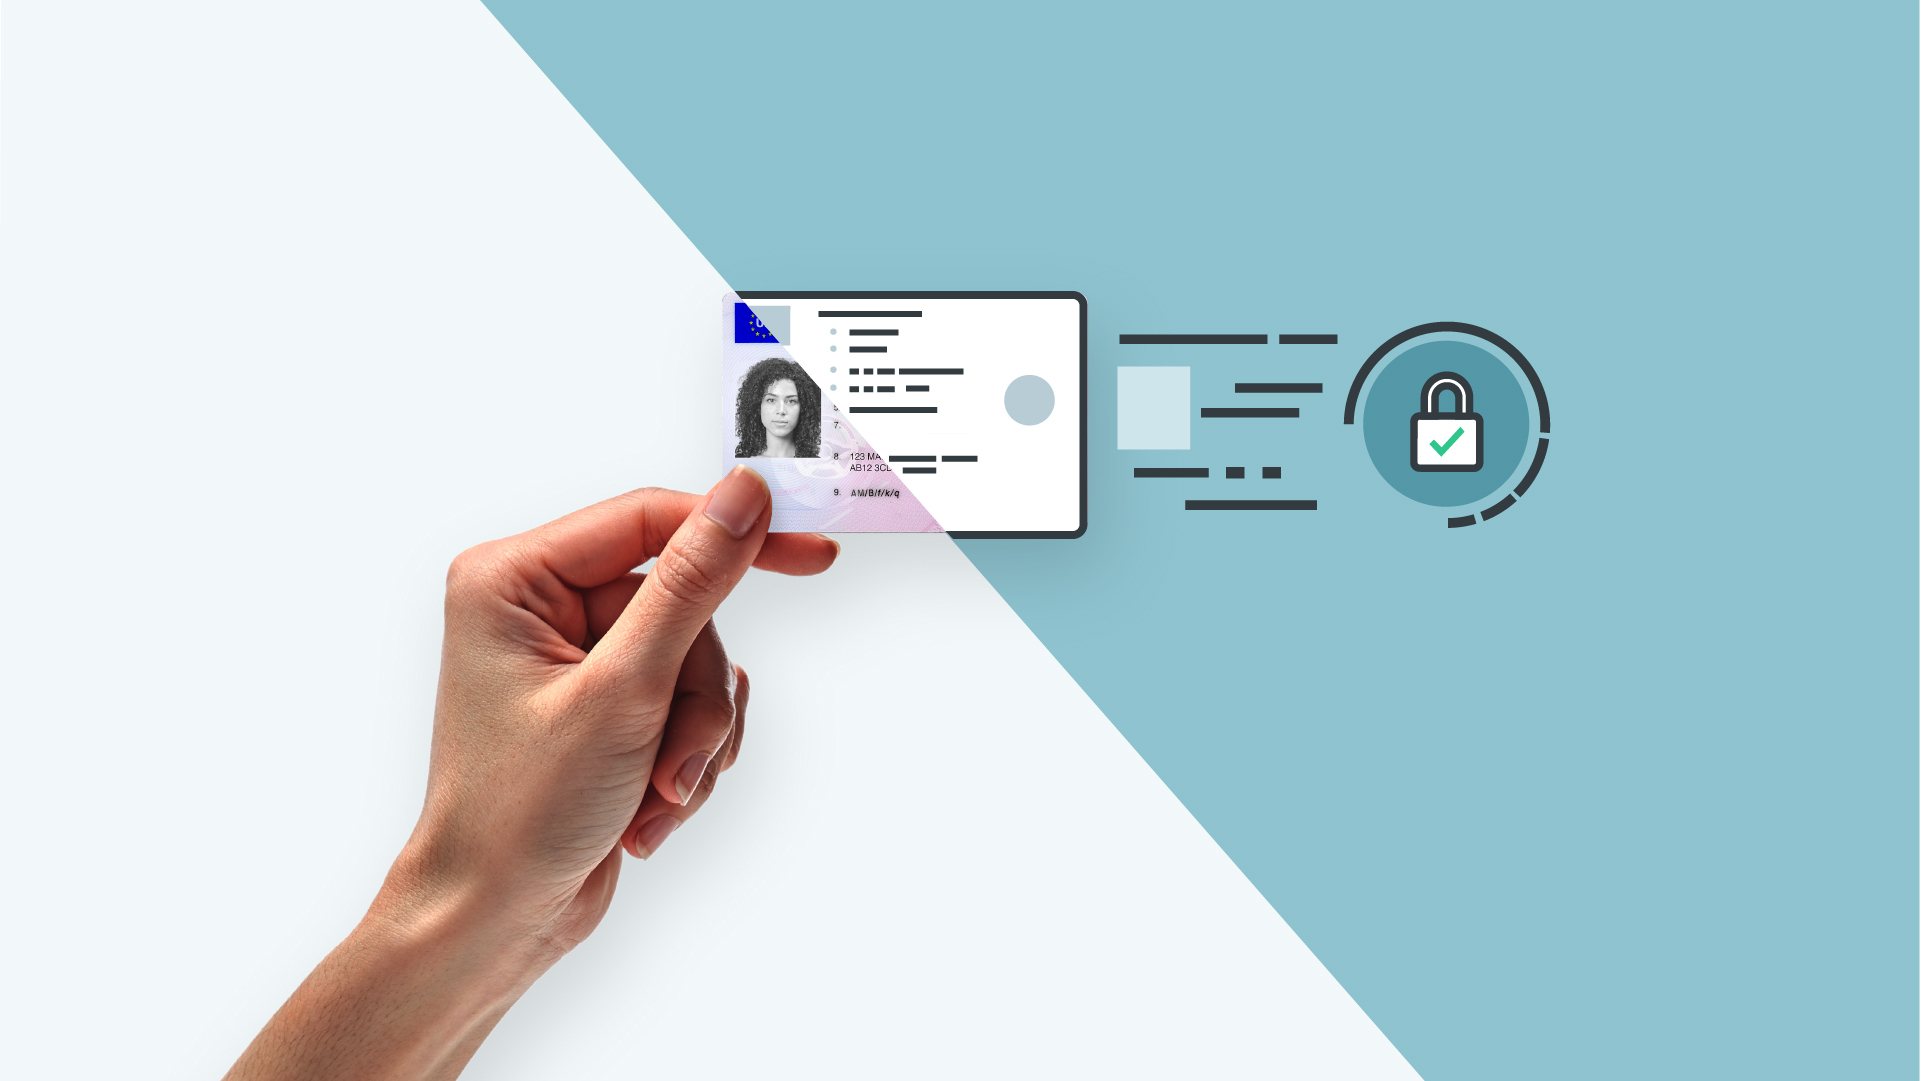 Automated identity verification